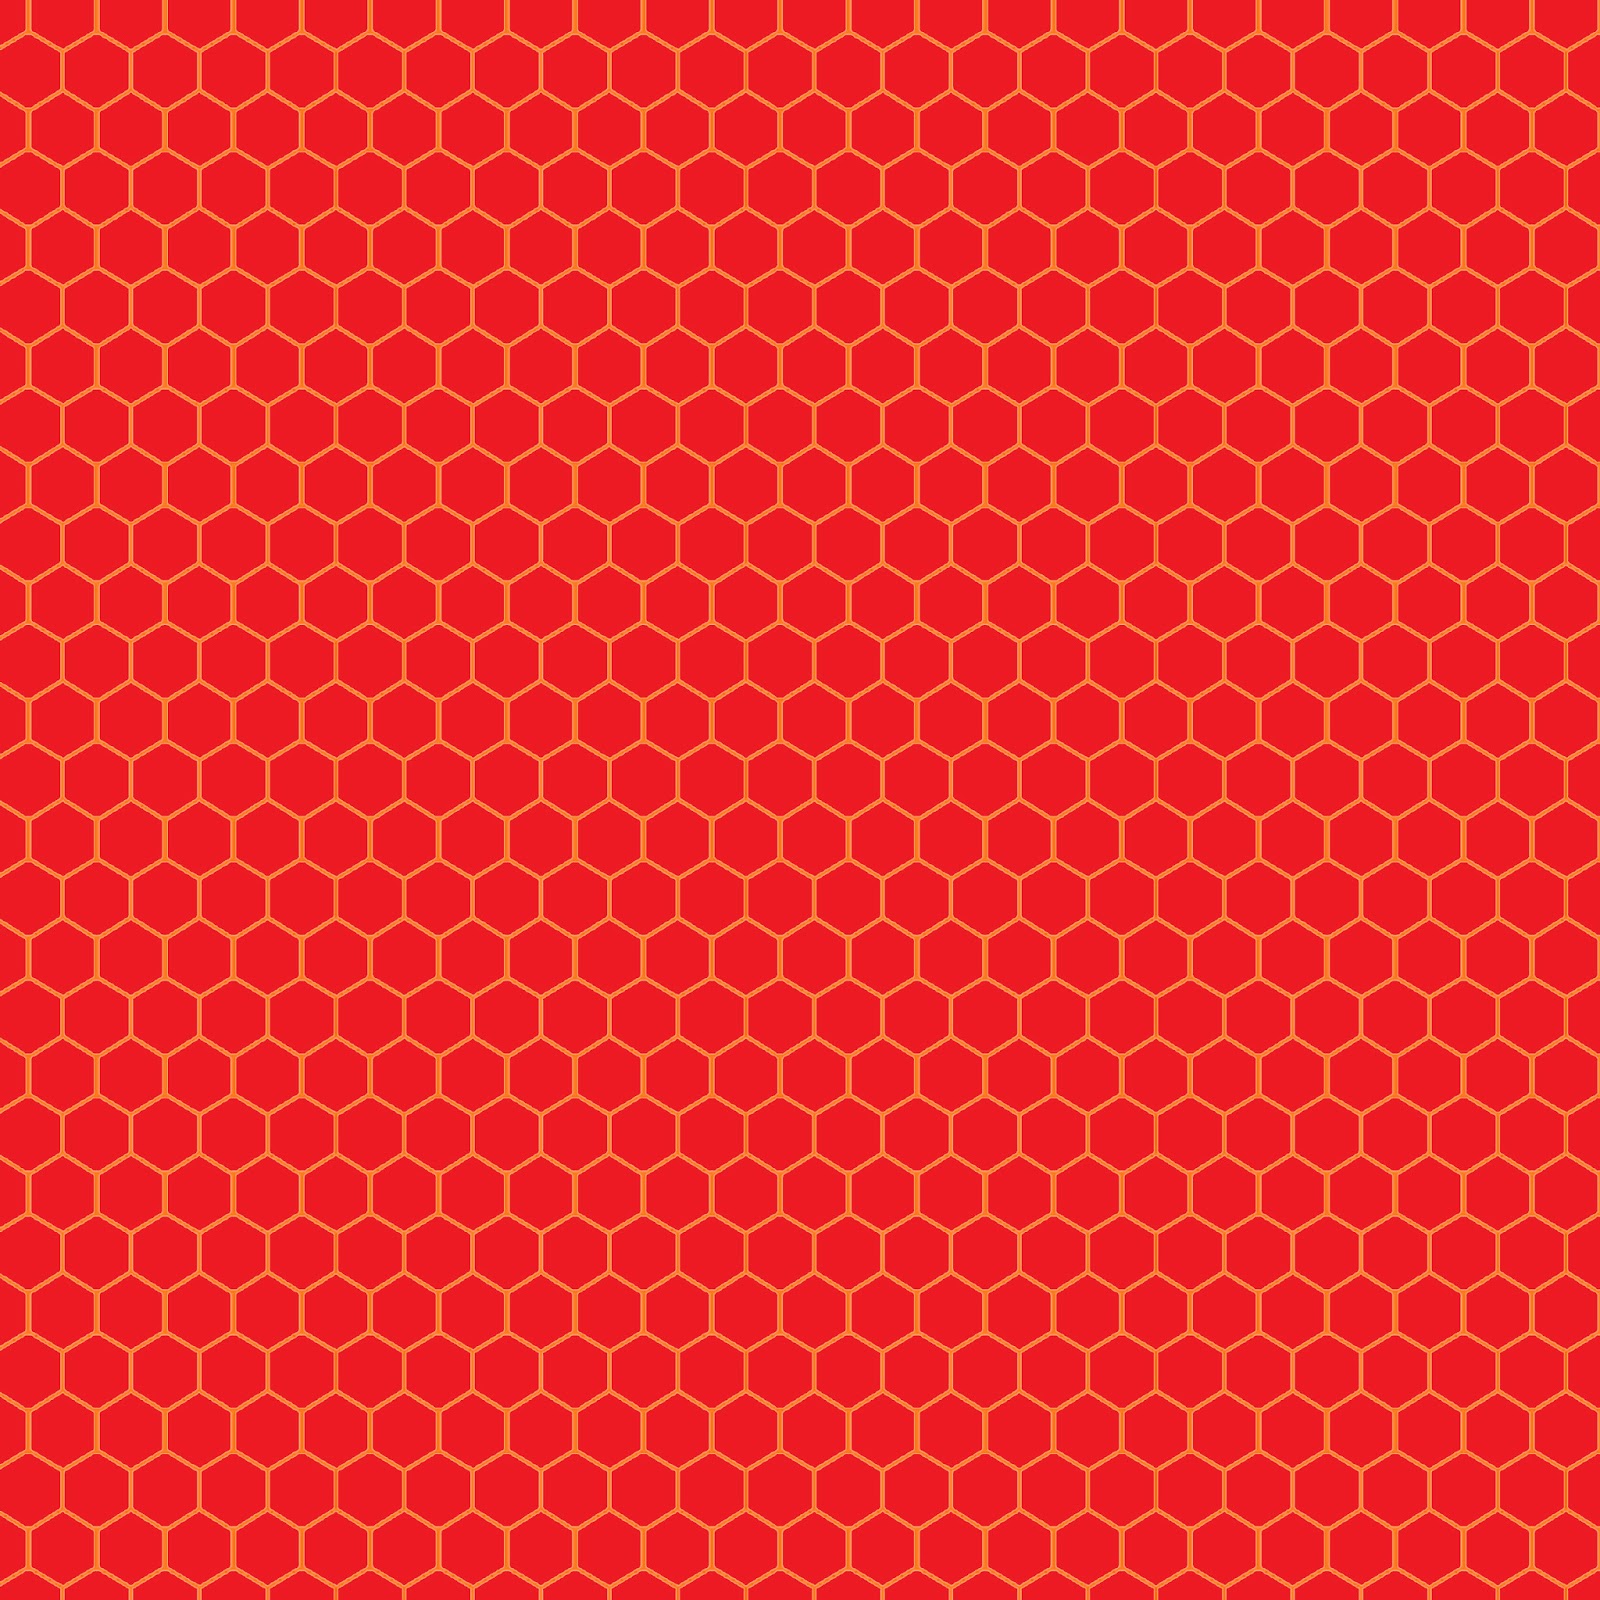 Red Hexagon Honeycomb Pattern